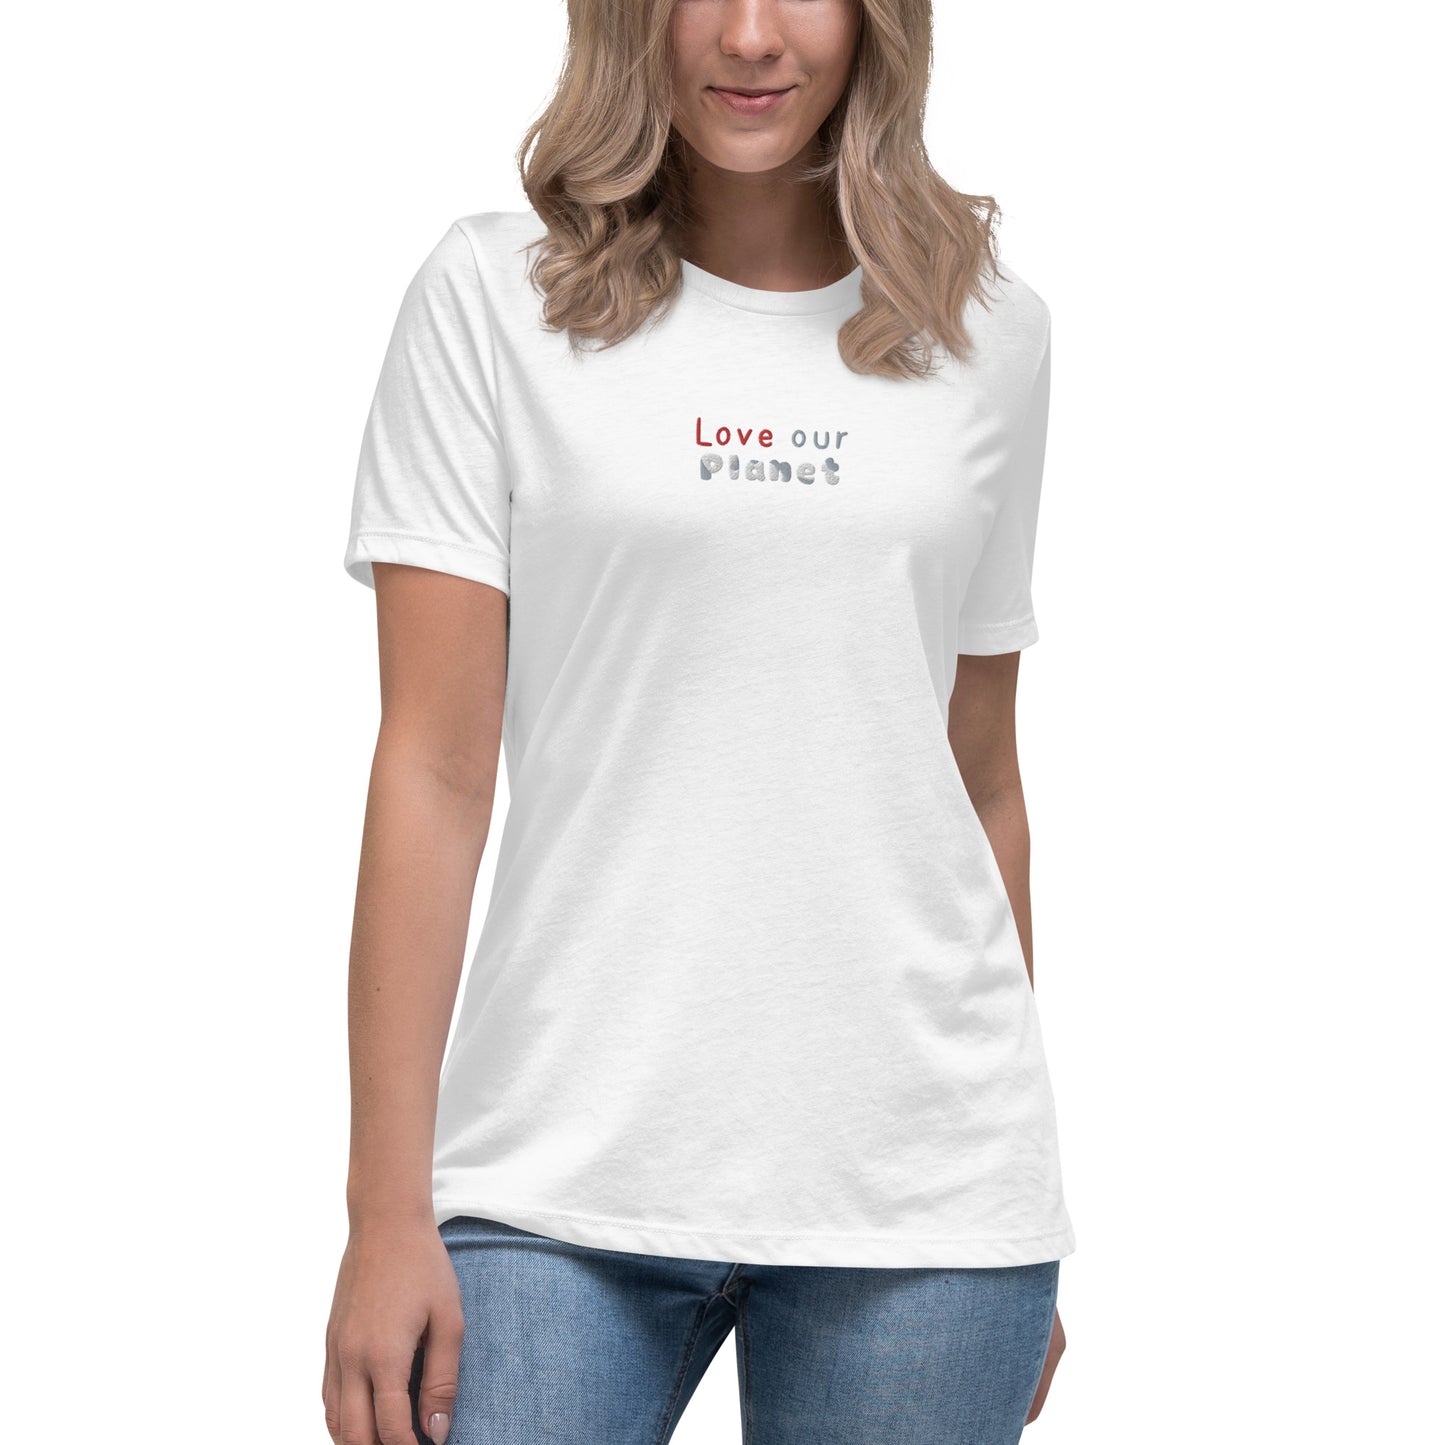 Camiseta bordada suelta mujer